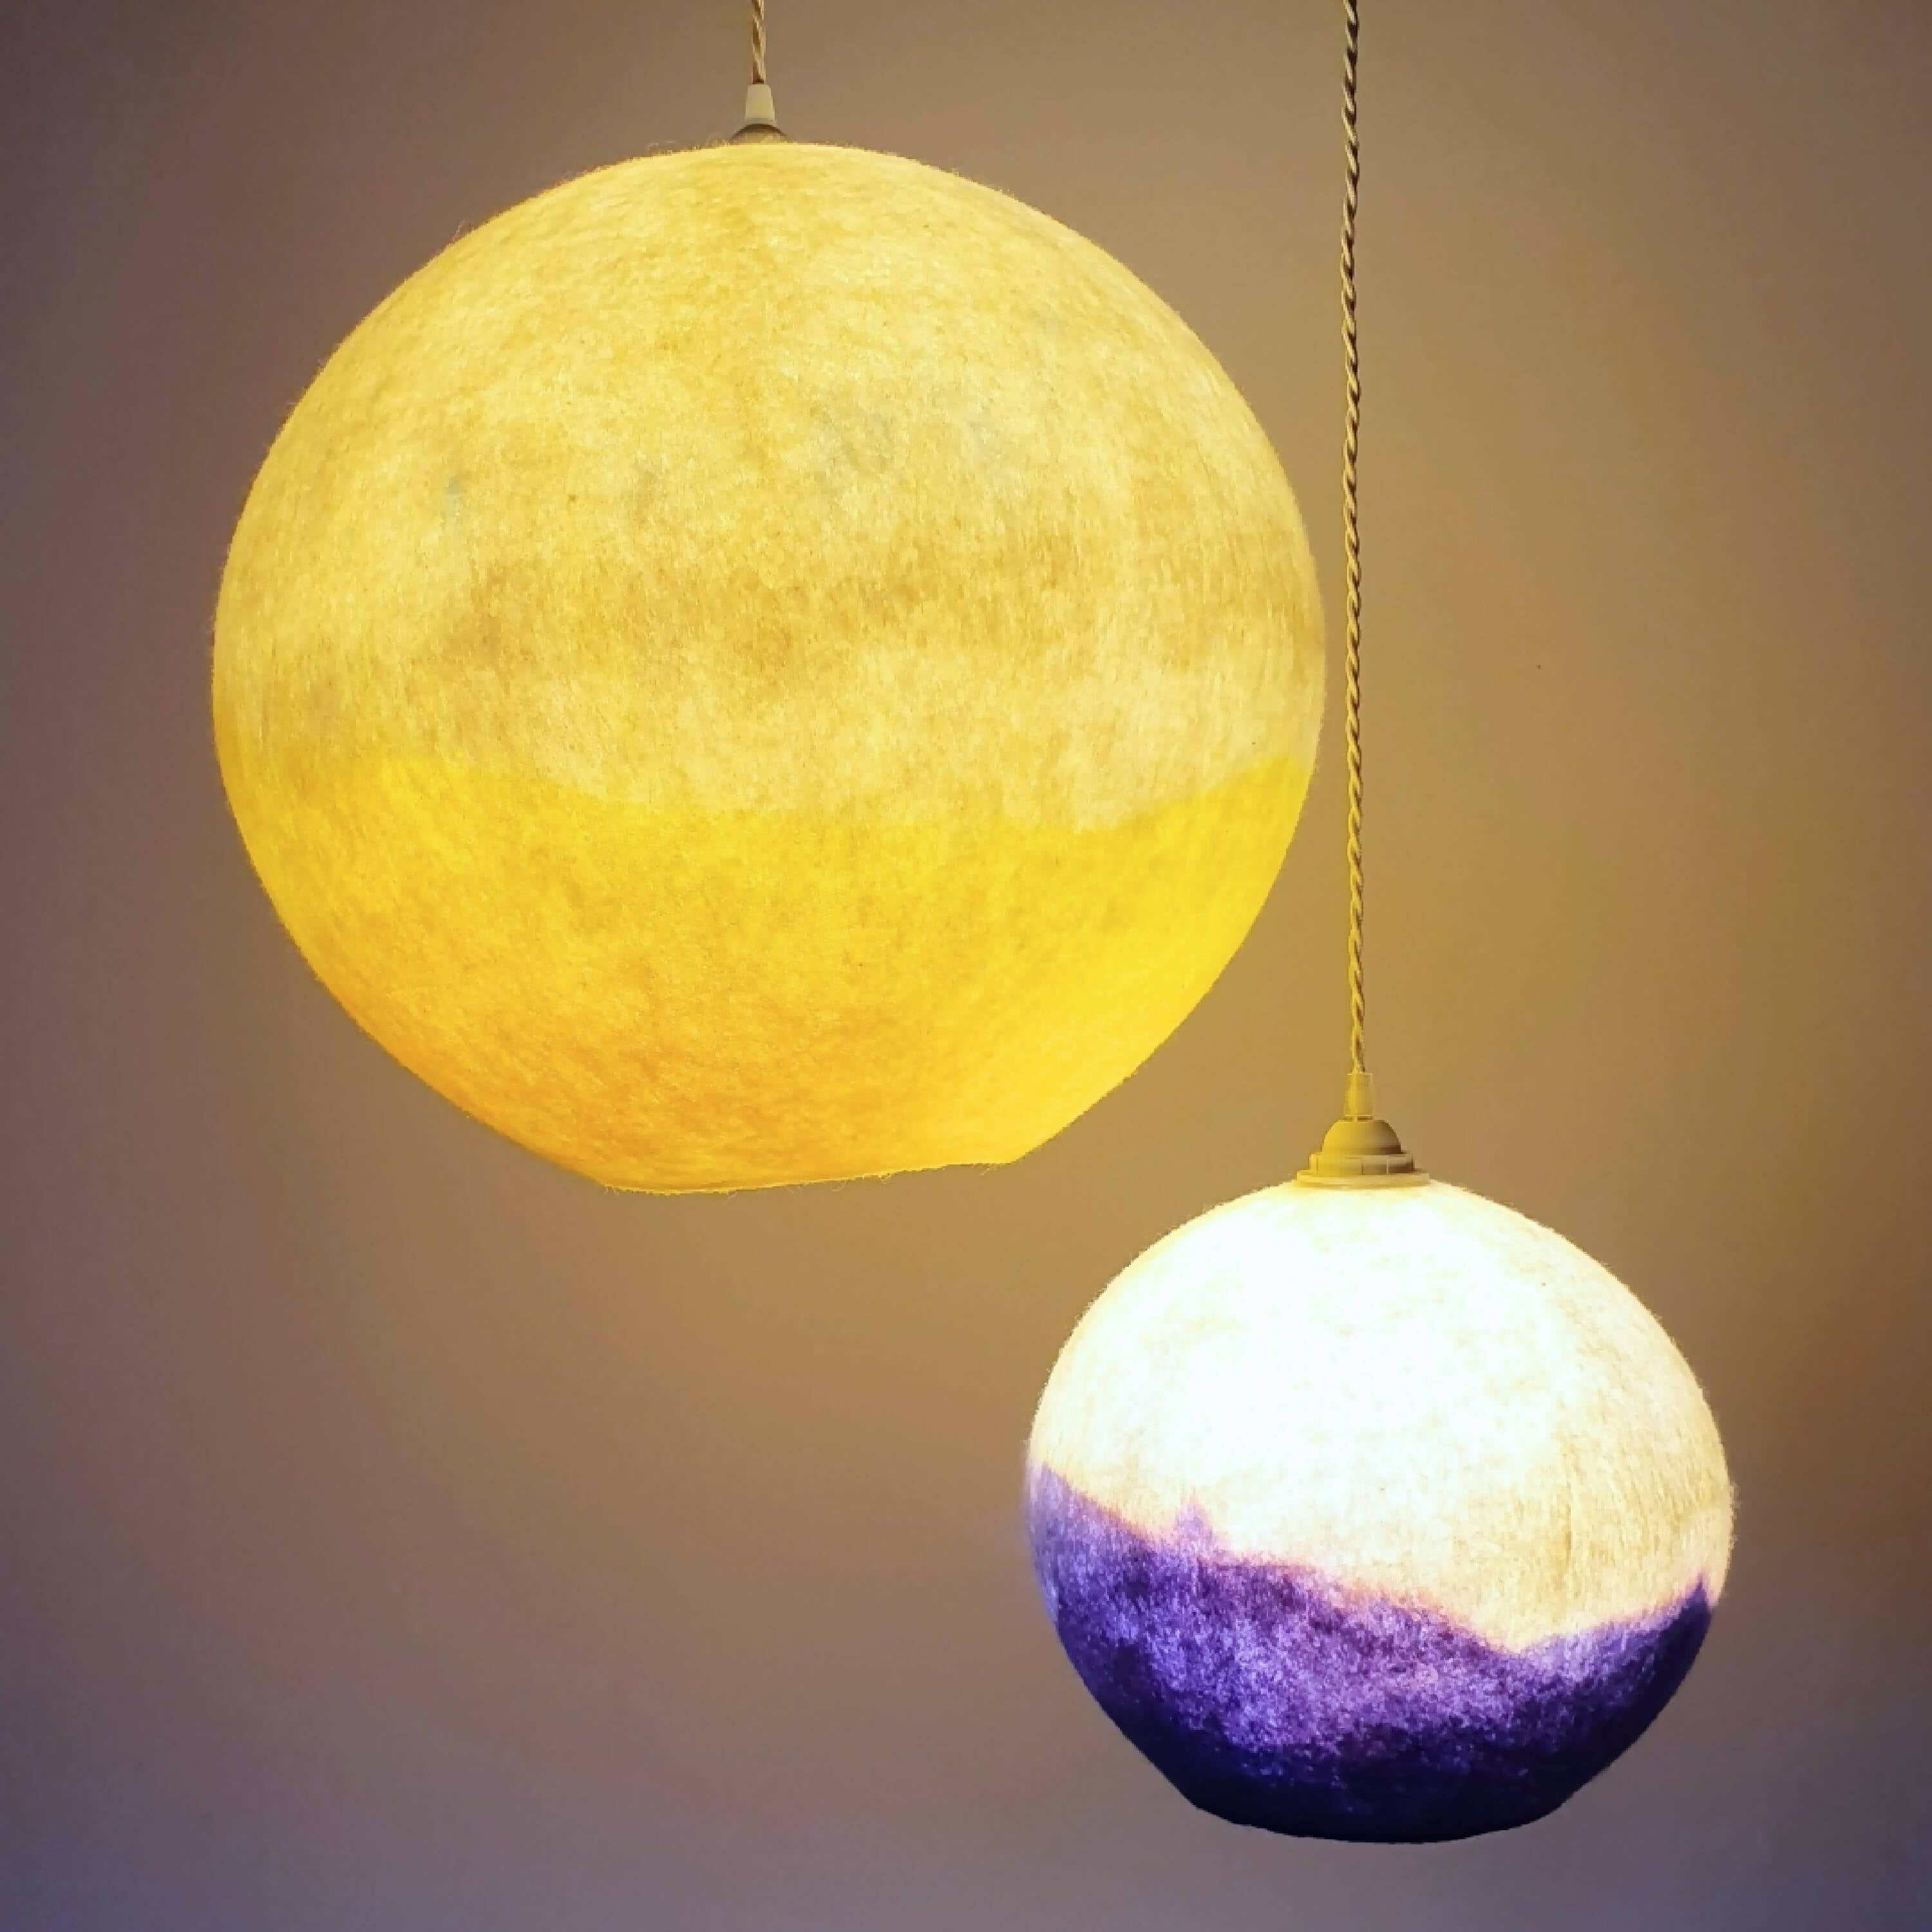 Suspension Pleine Lune violette n°2 | EMPREINTES Paris | EMPREINTES Paris